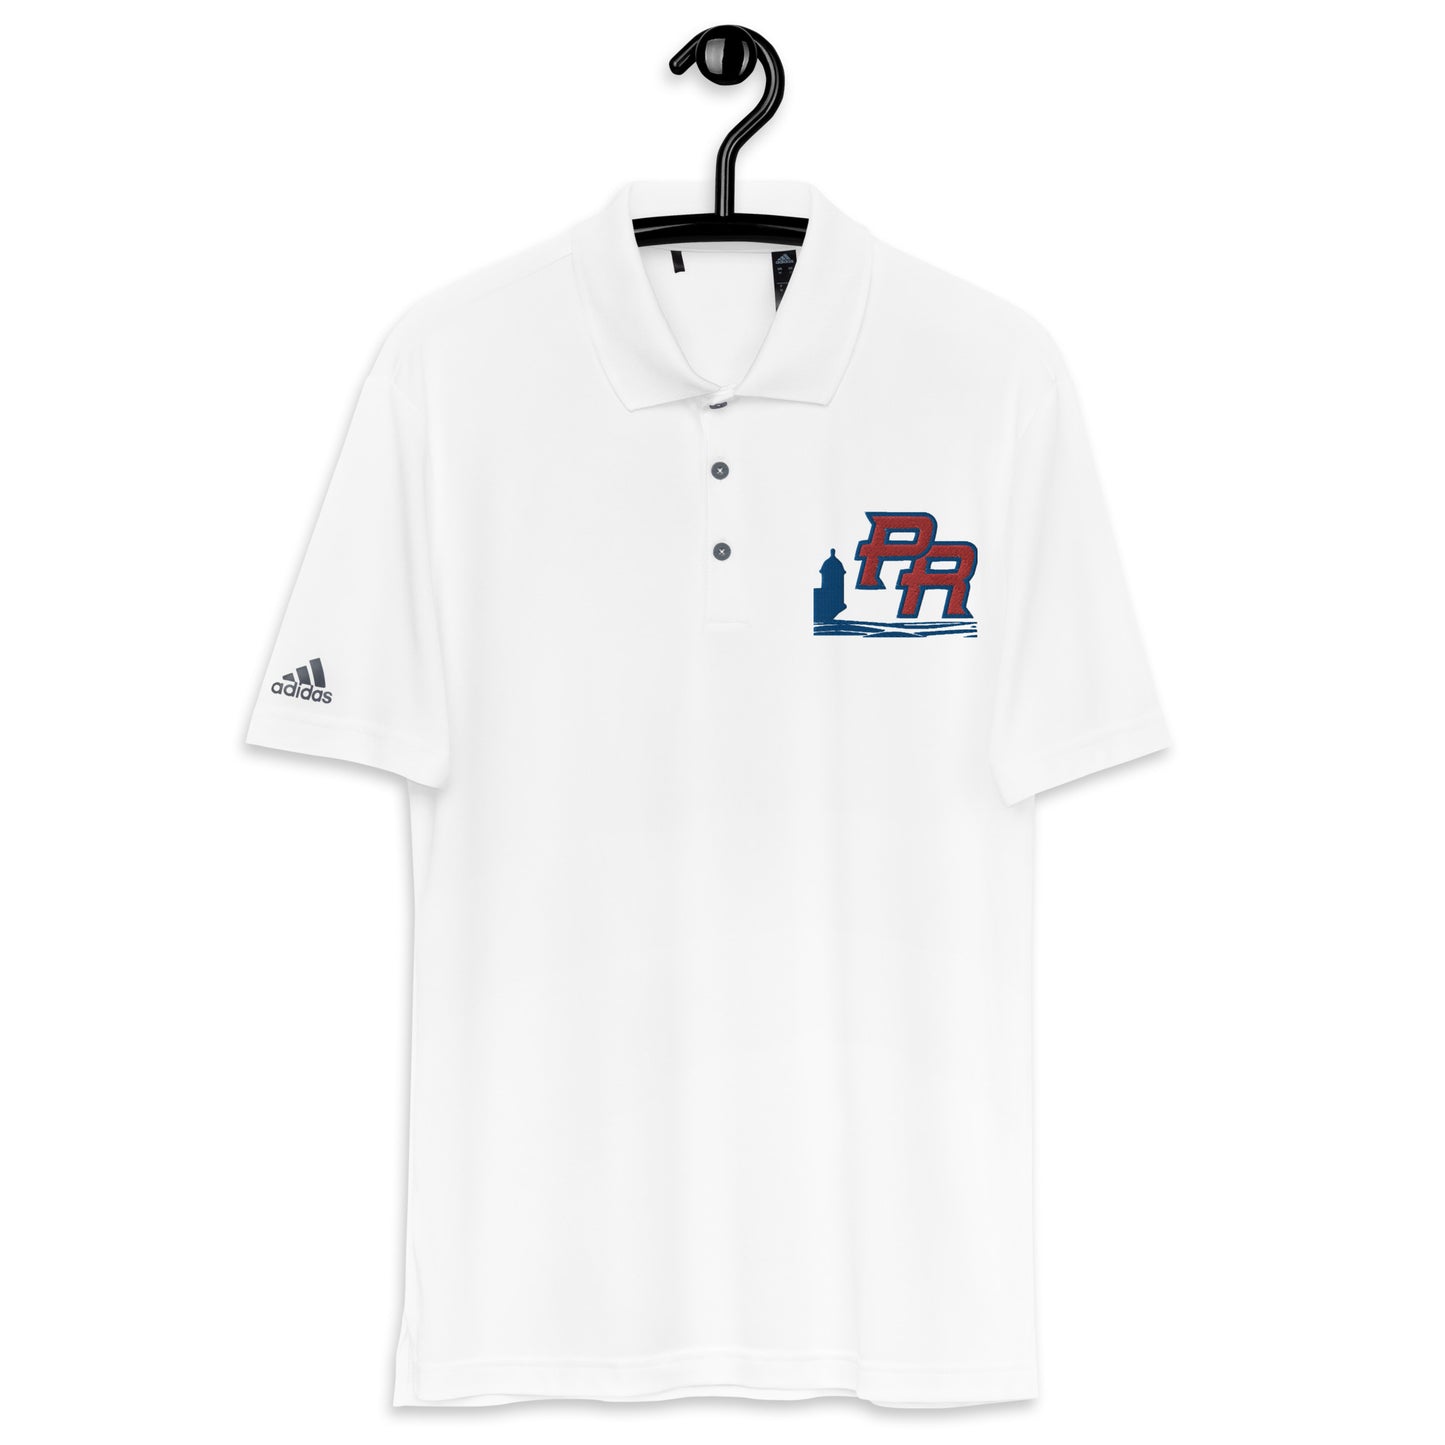 Puerto Baseball adidas polo shirt –